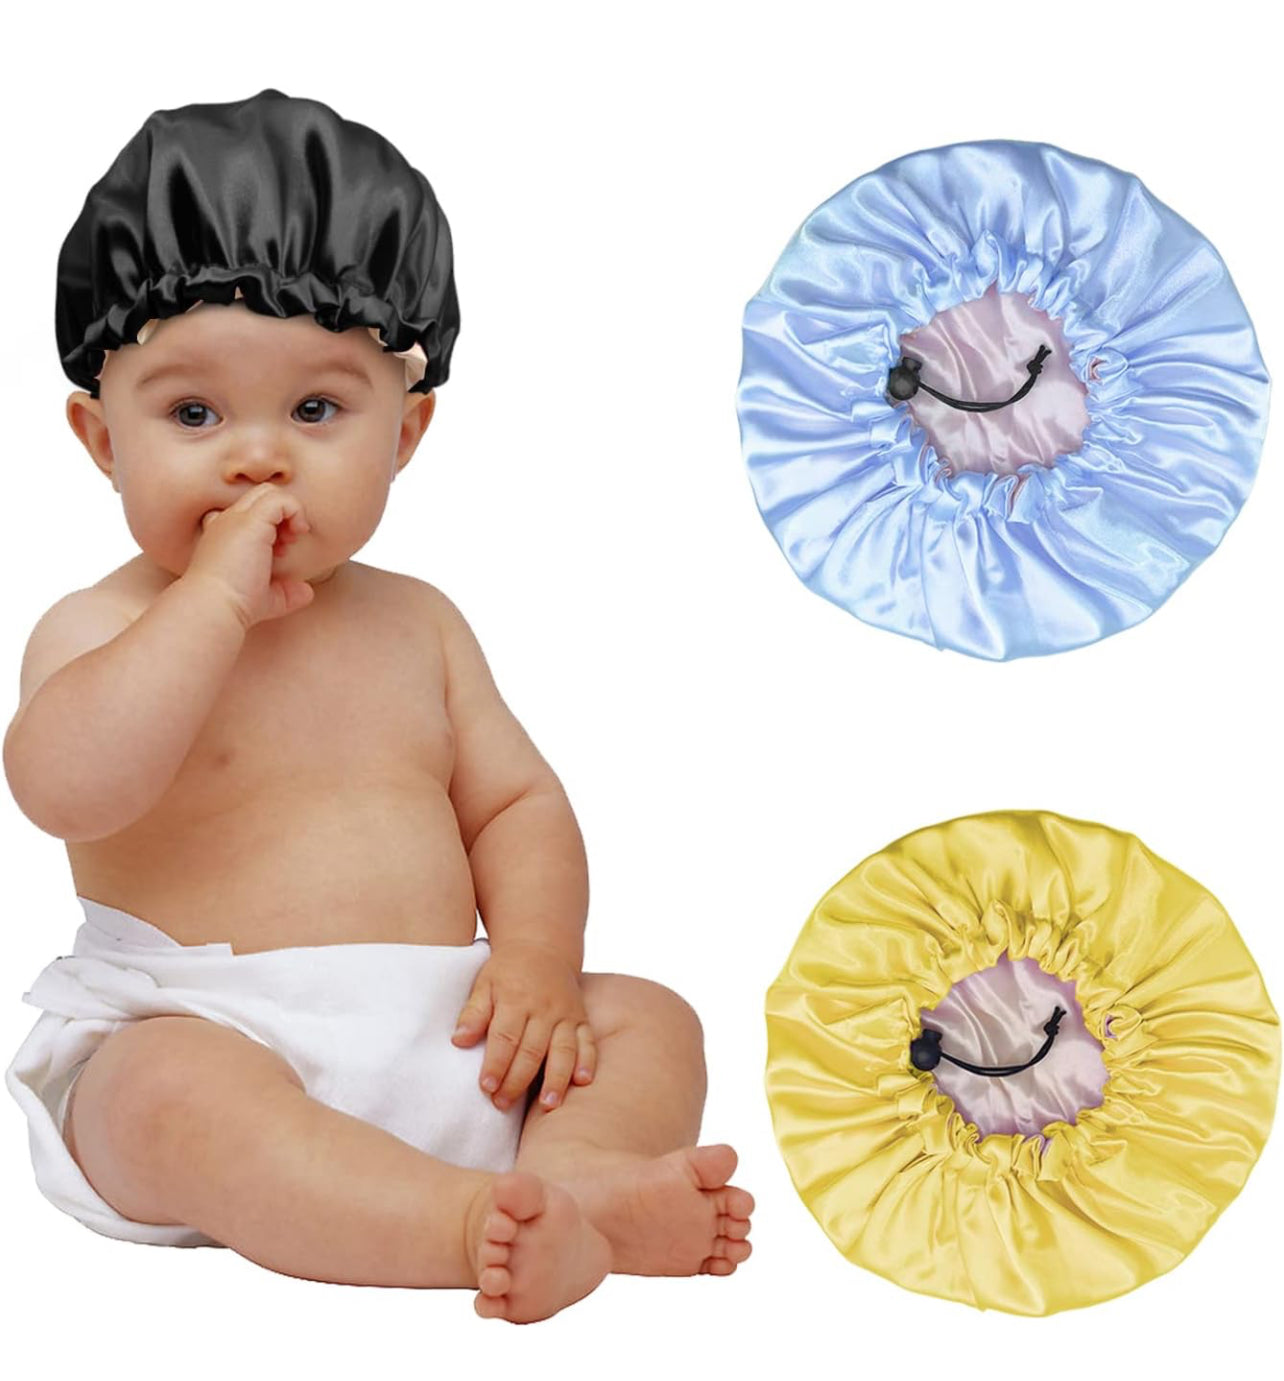 3 Pieces Kids Satin Bonnet, Reversible Silk Bonnet for Teens Toddler Child Baby(Pink,Purple,Rose)